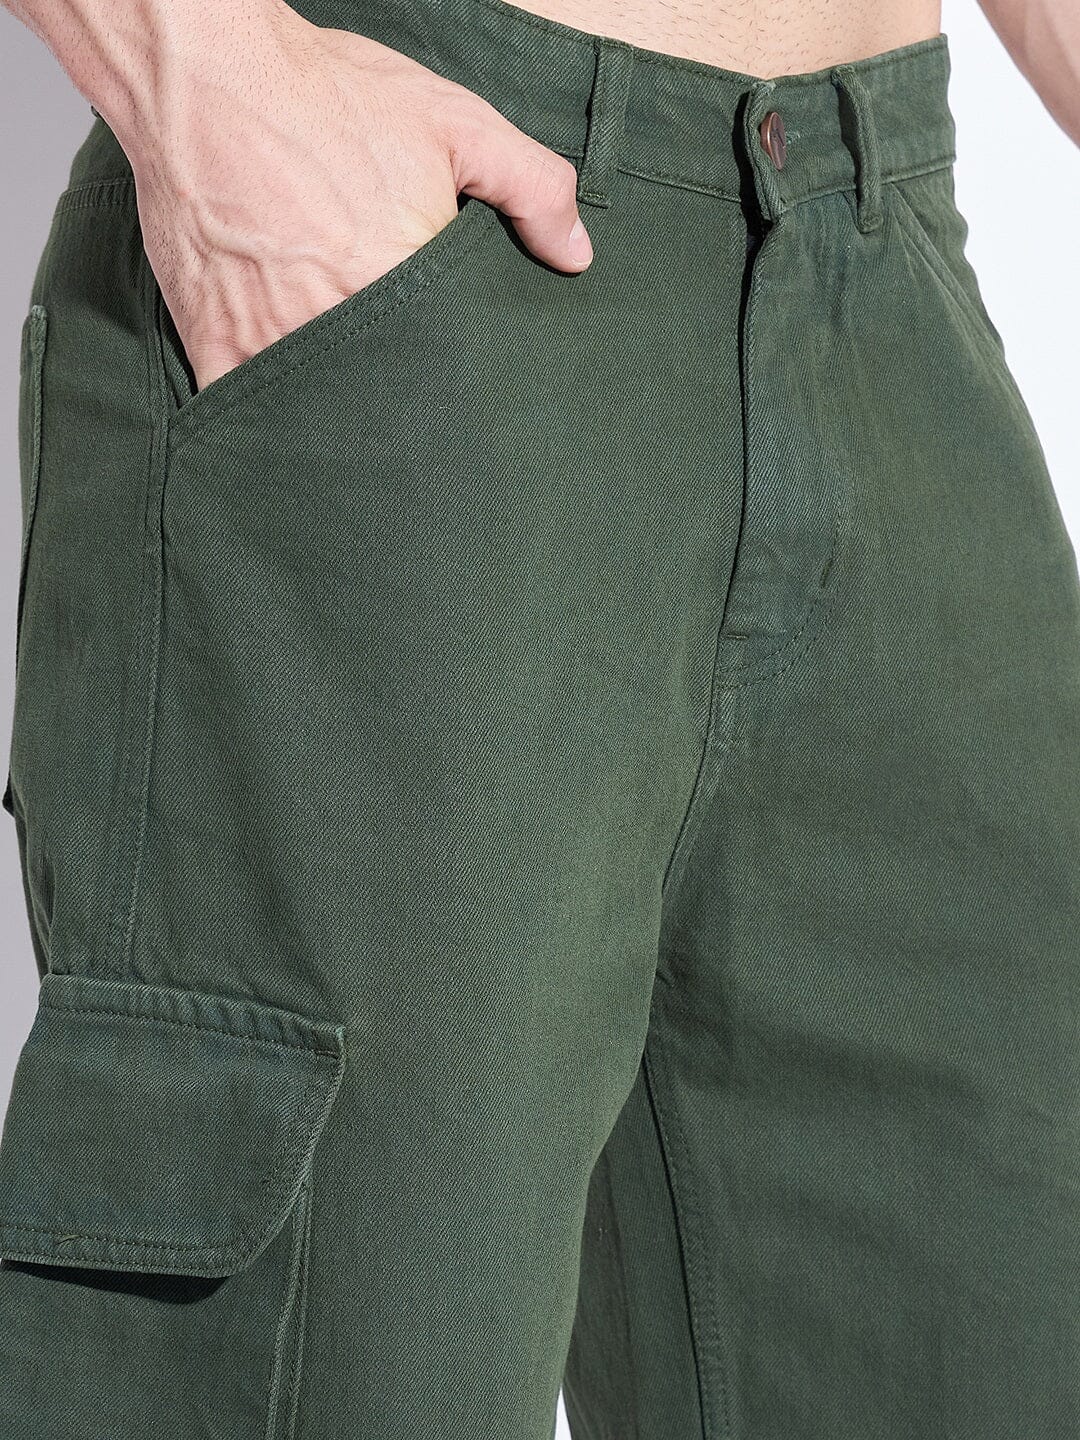 Pepe Jeans STANLEY - Straight leg jeans - green/dark green - Zalando.de